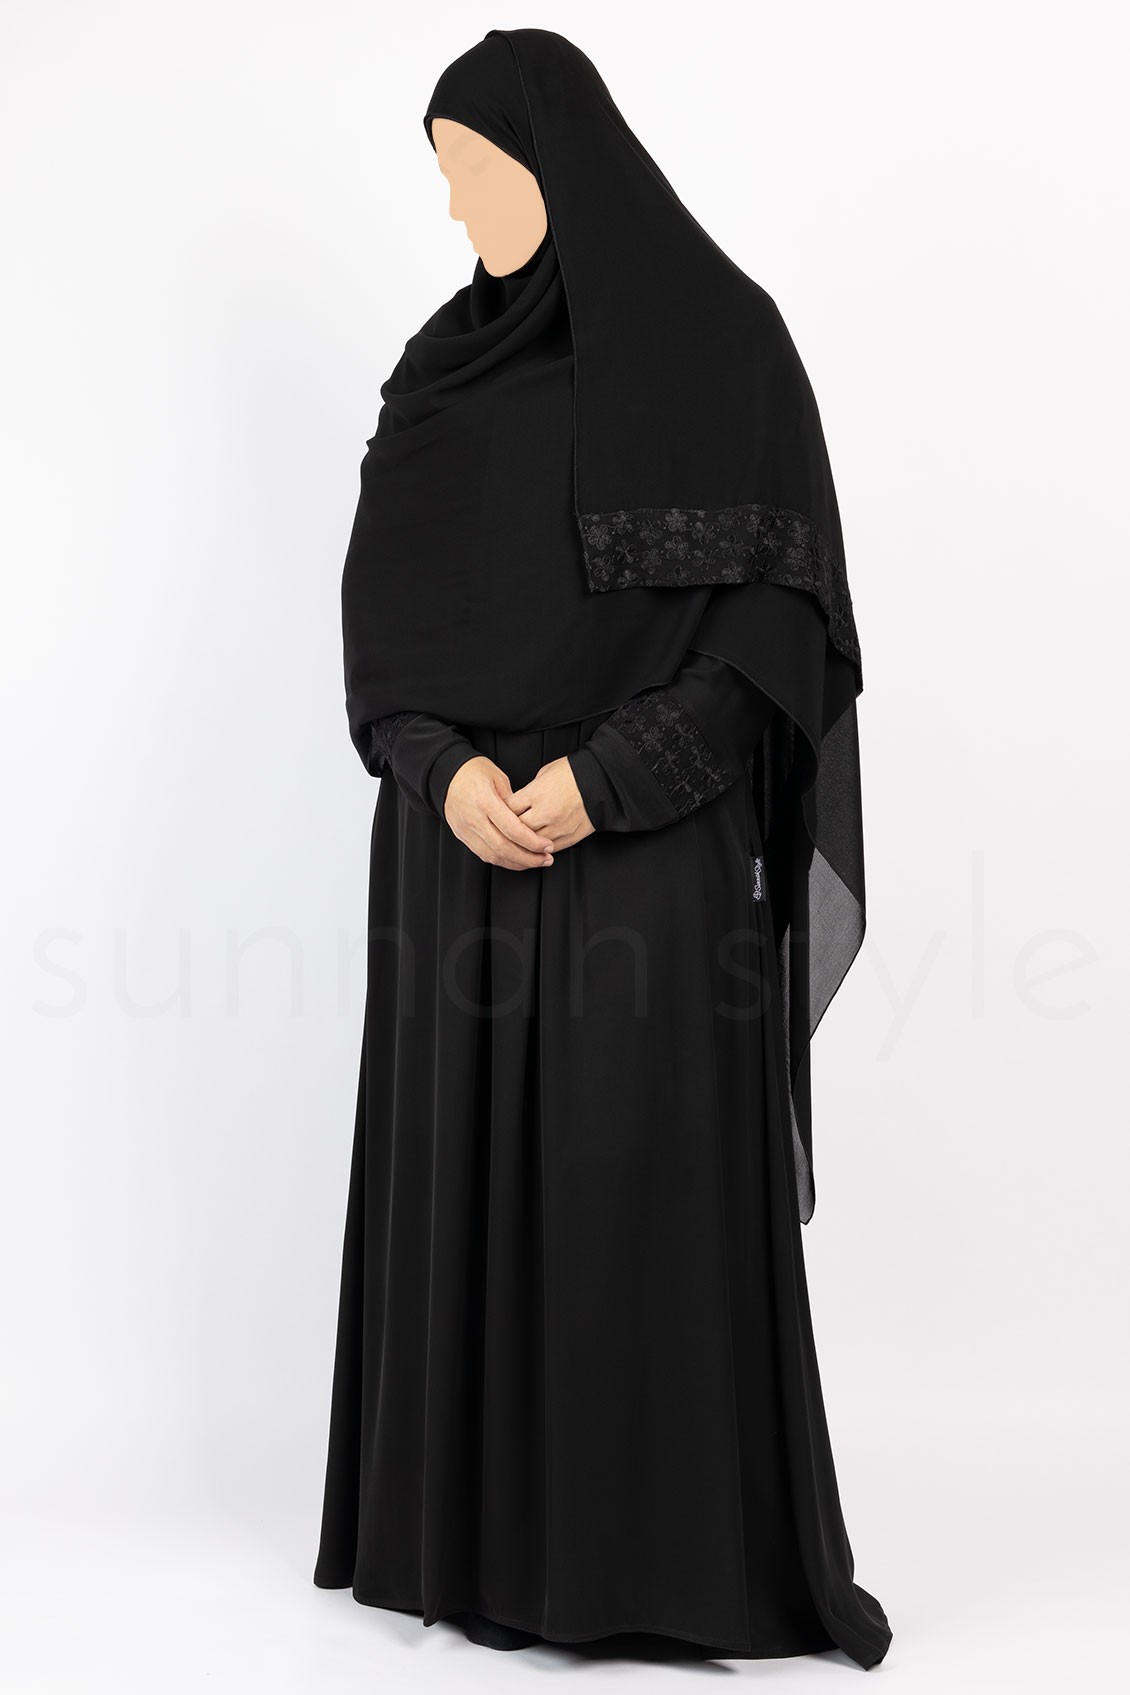 Sunnah Style Daisy Shayla Embroidered Hijab